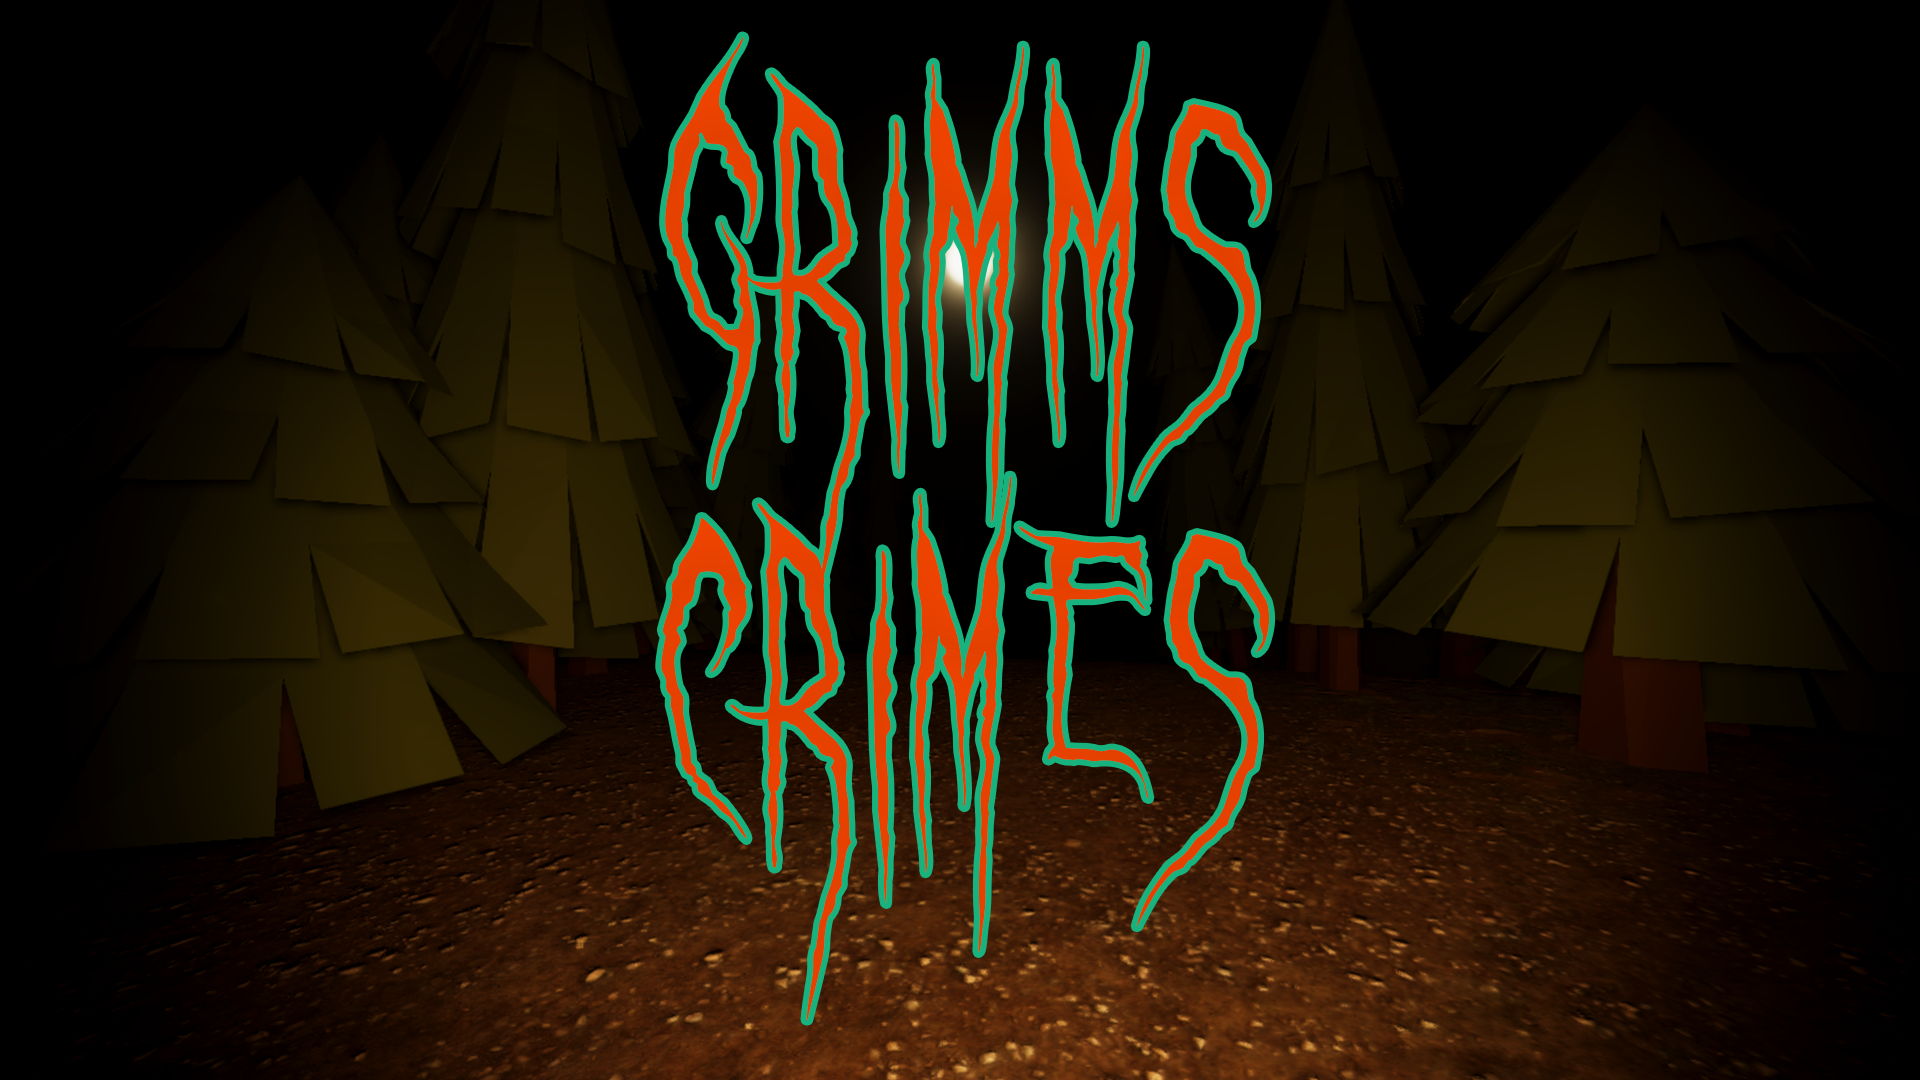 Grimms Crimes